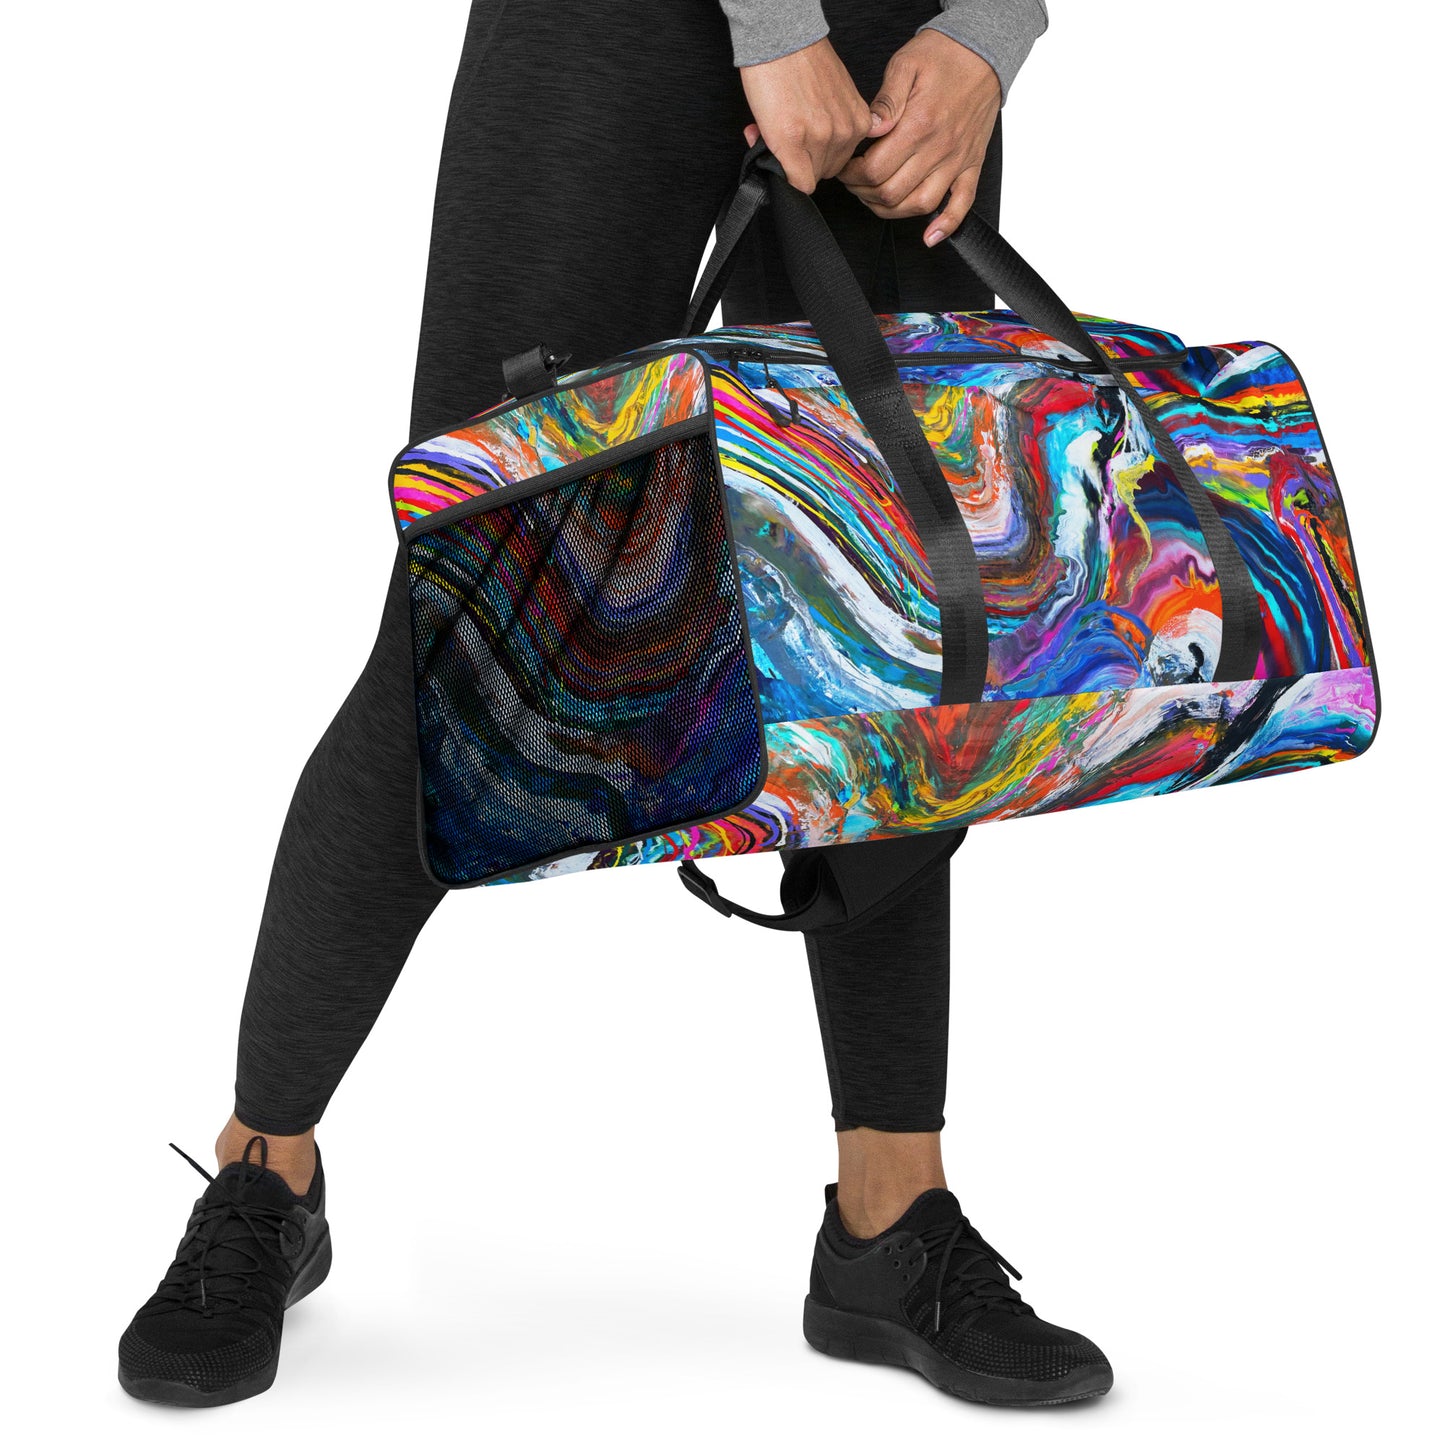 Duffle bag - Rainbow Wave design